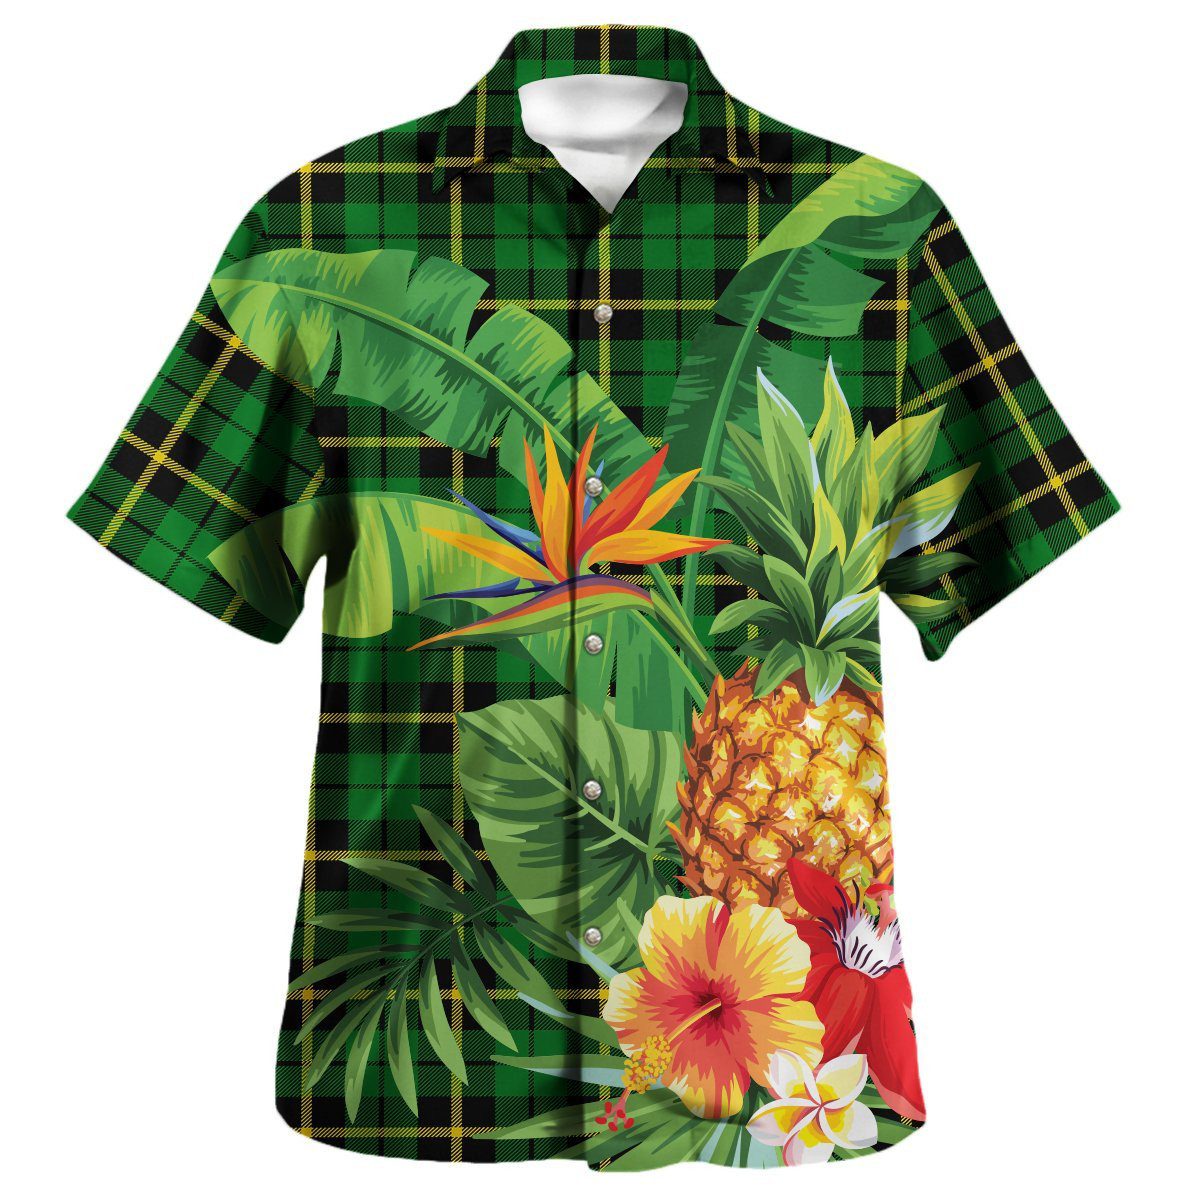 Wallace Hunting – Green Tartan Aloha Shirt version 2